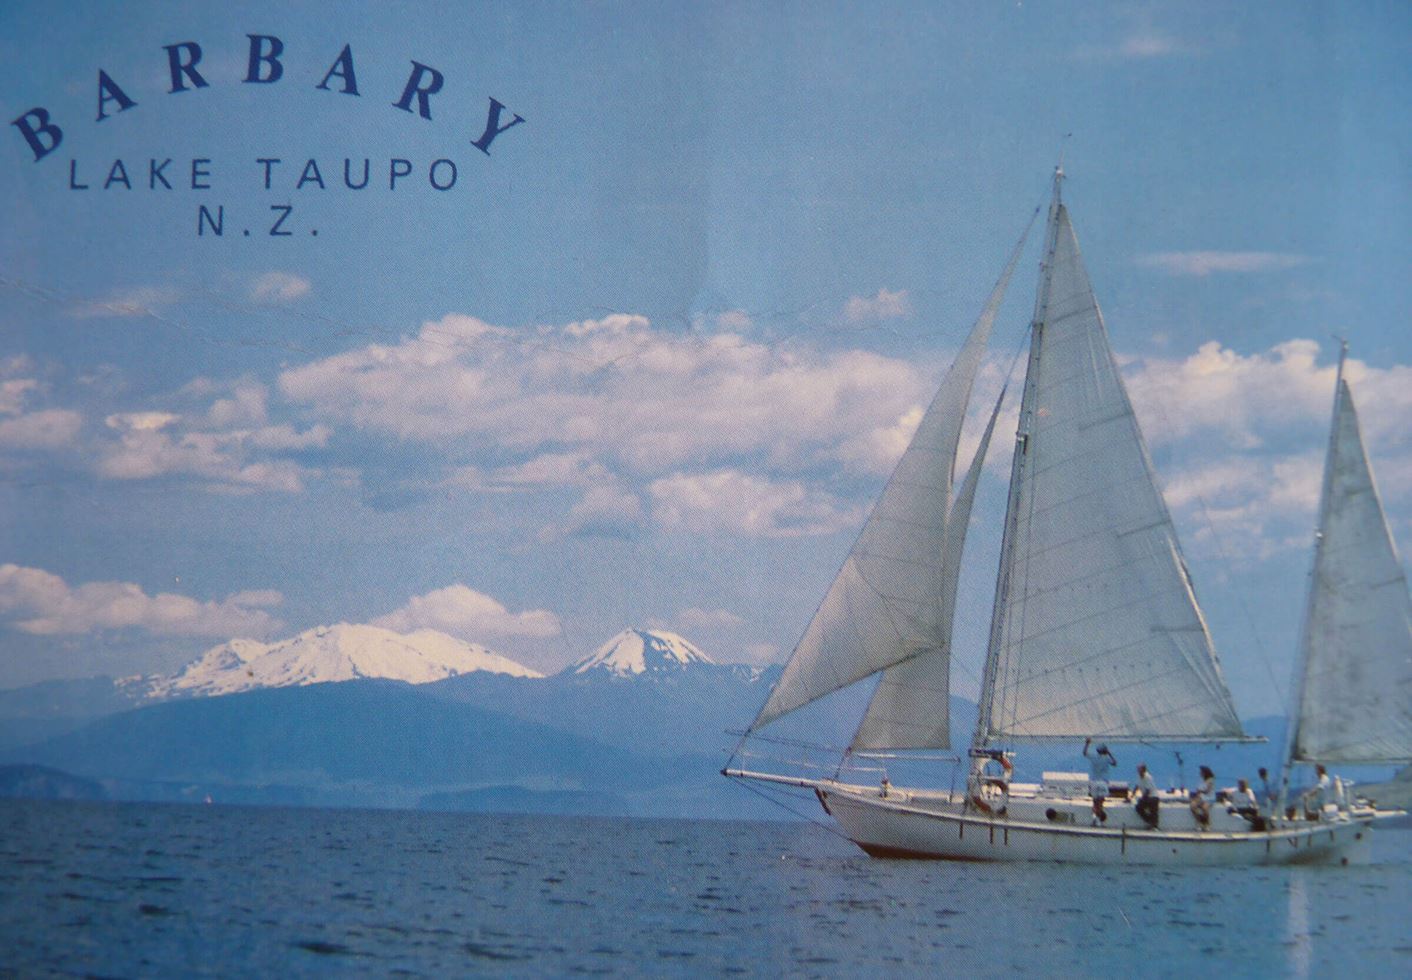 Heritage Sail Barbary Lake Taupo Yacht Cruise